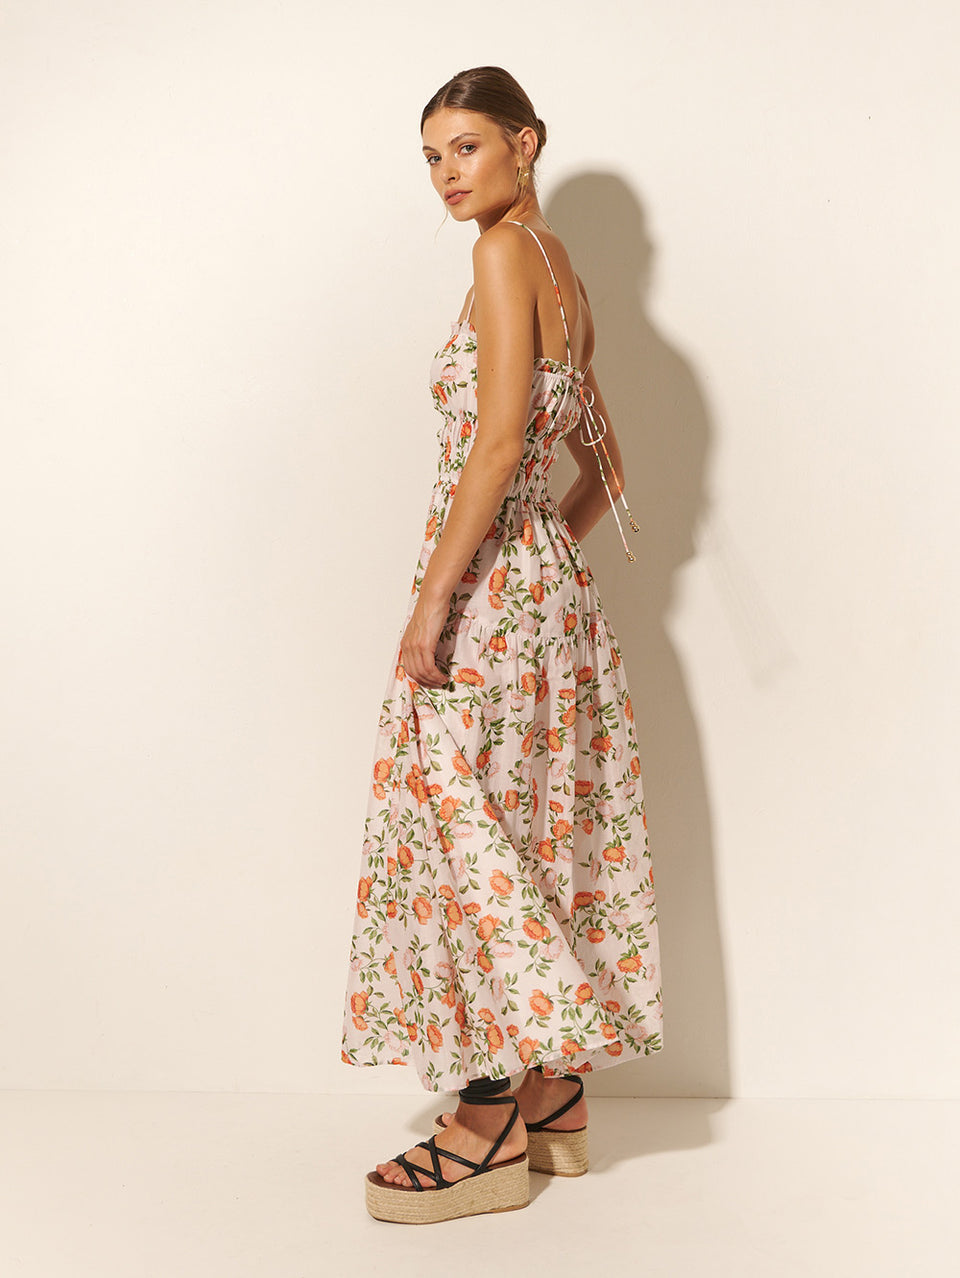 KIVARI Varenna Maxi Dress | Model wears Pink, Orange and Green Maxi Dress Side View